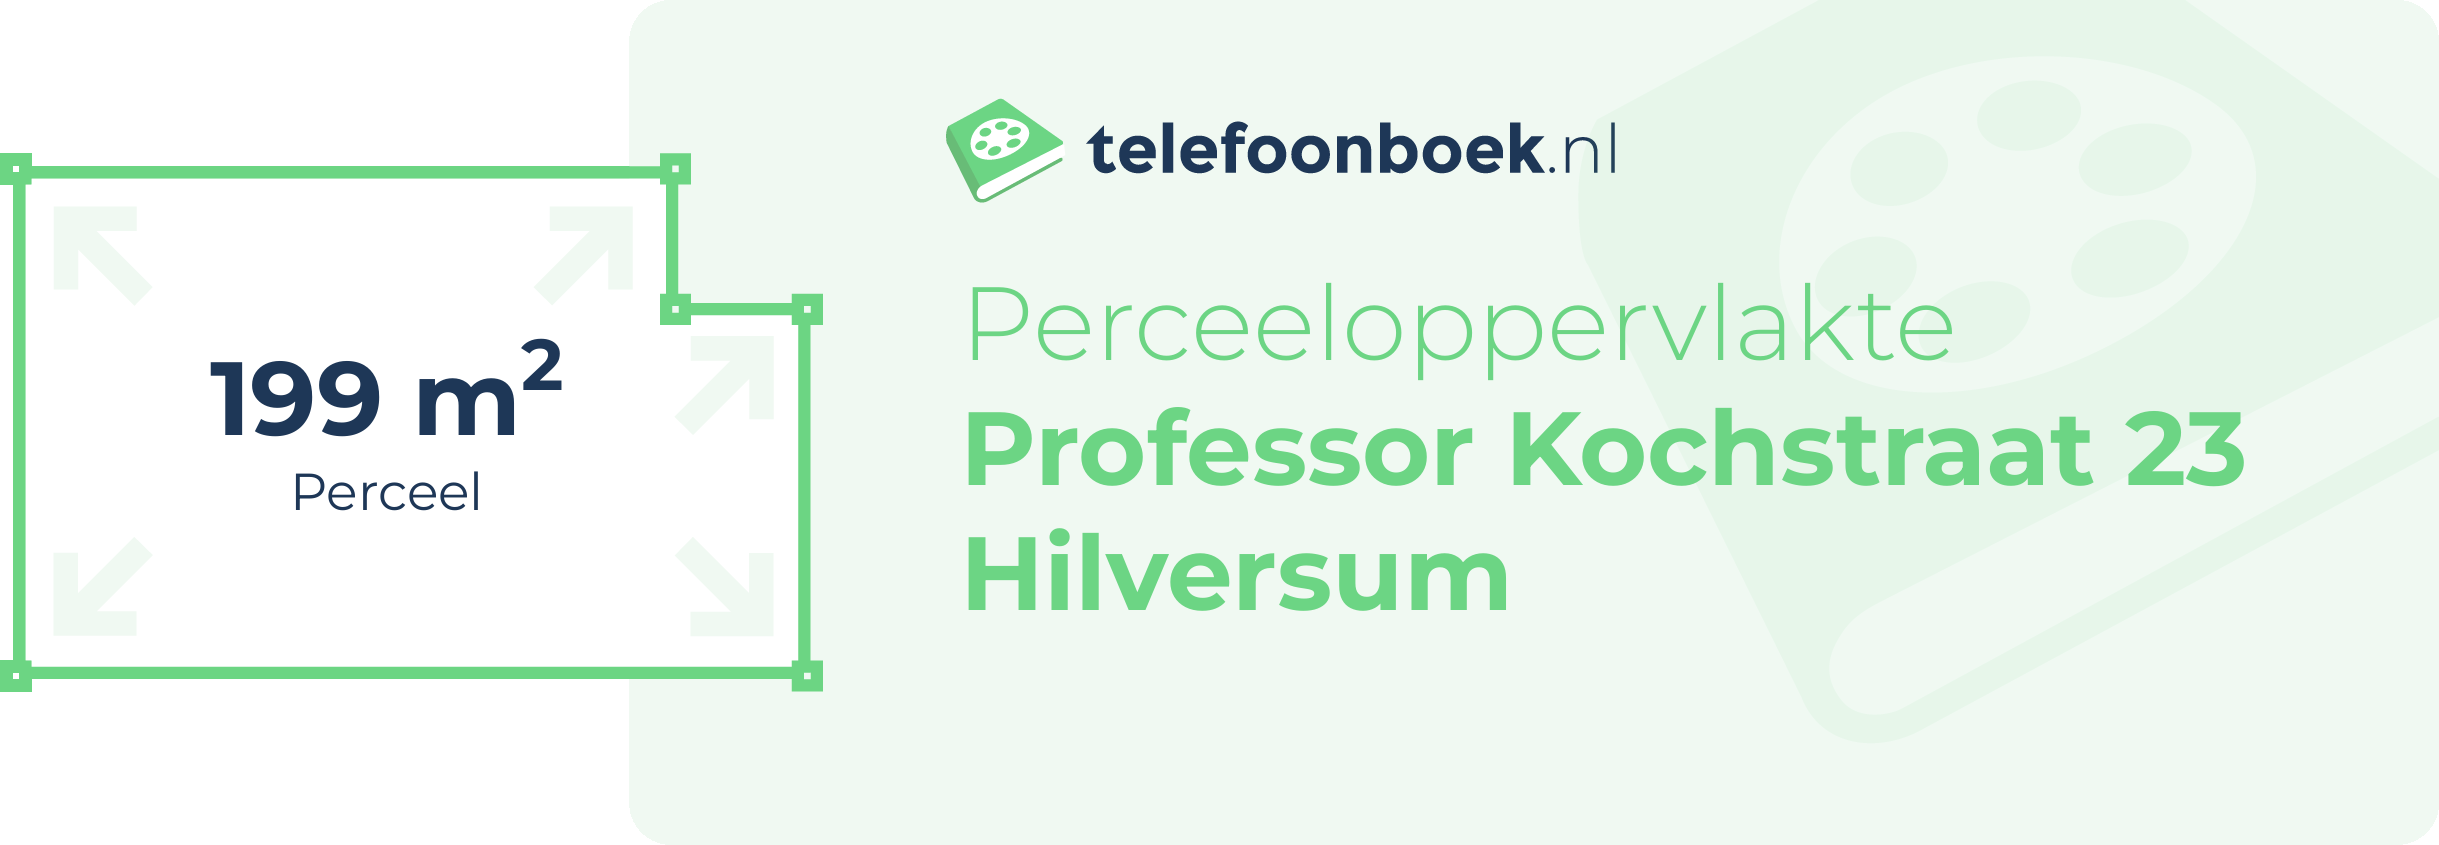 Perceeloppervlakte Professor Kochstraat 23 Hilversum